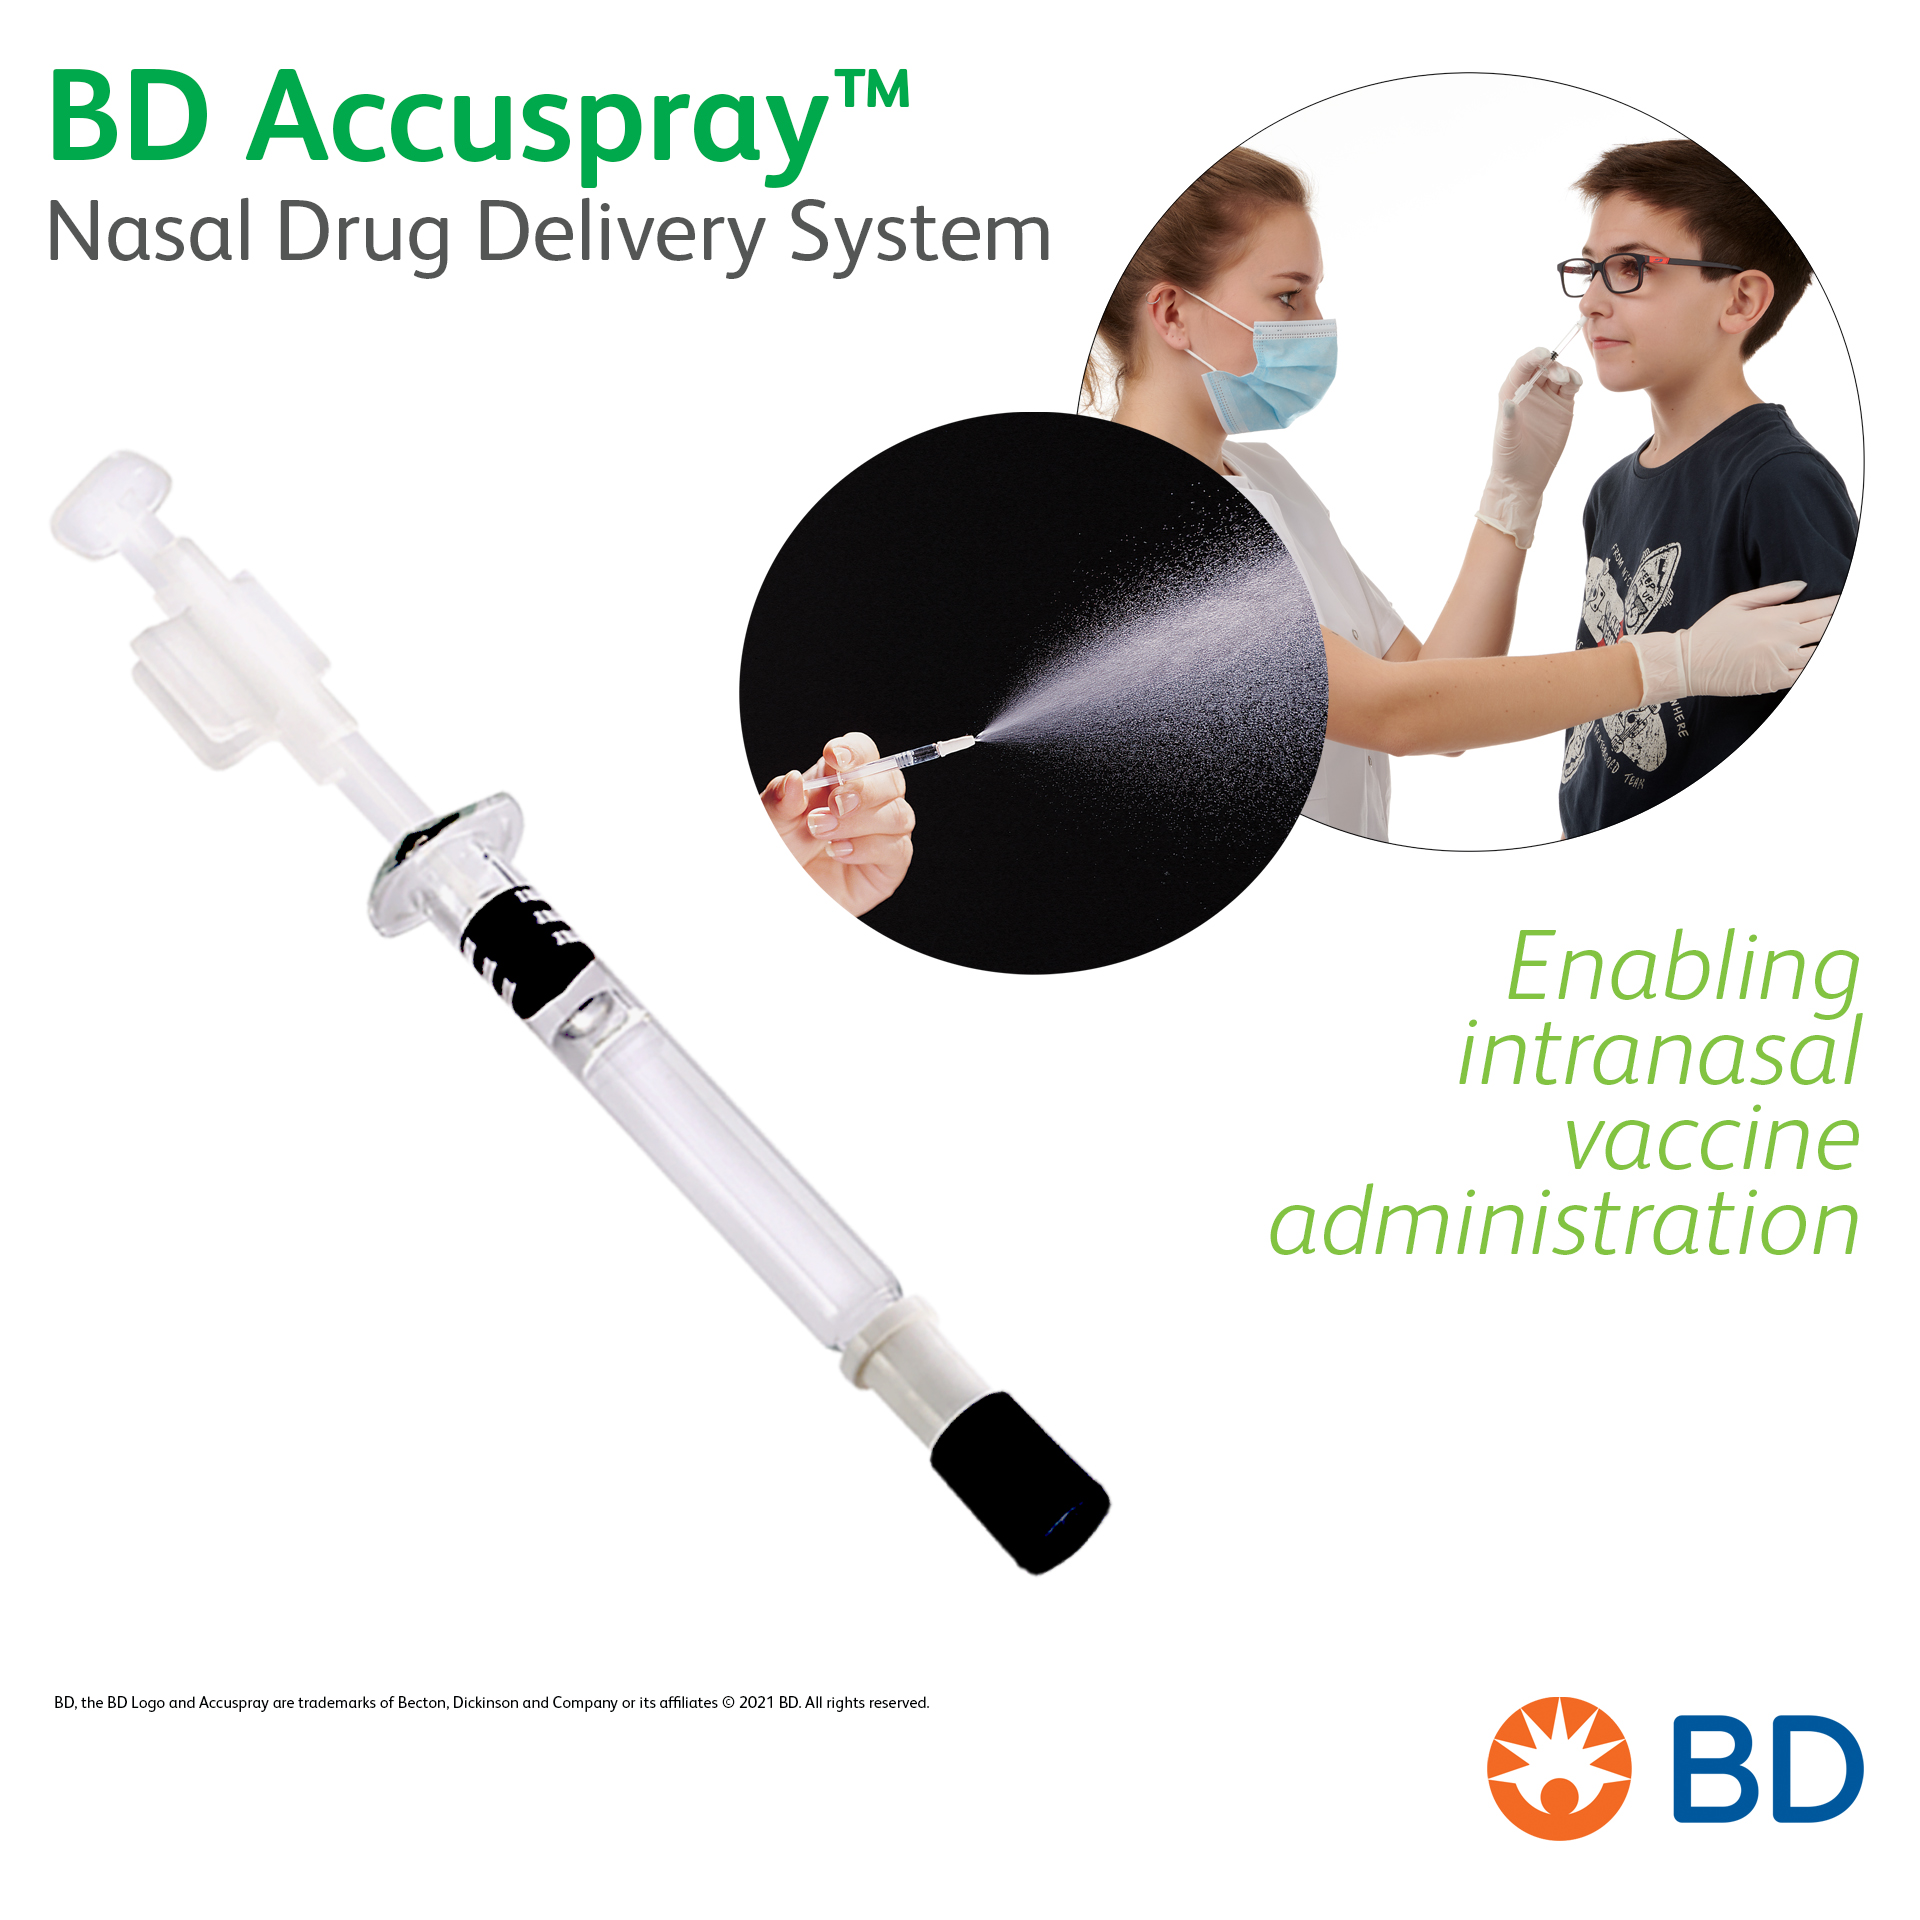 BD Accuspray™ Nasal Drug Delivery System - Enabling intranasal vaccine administration